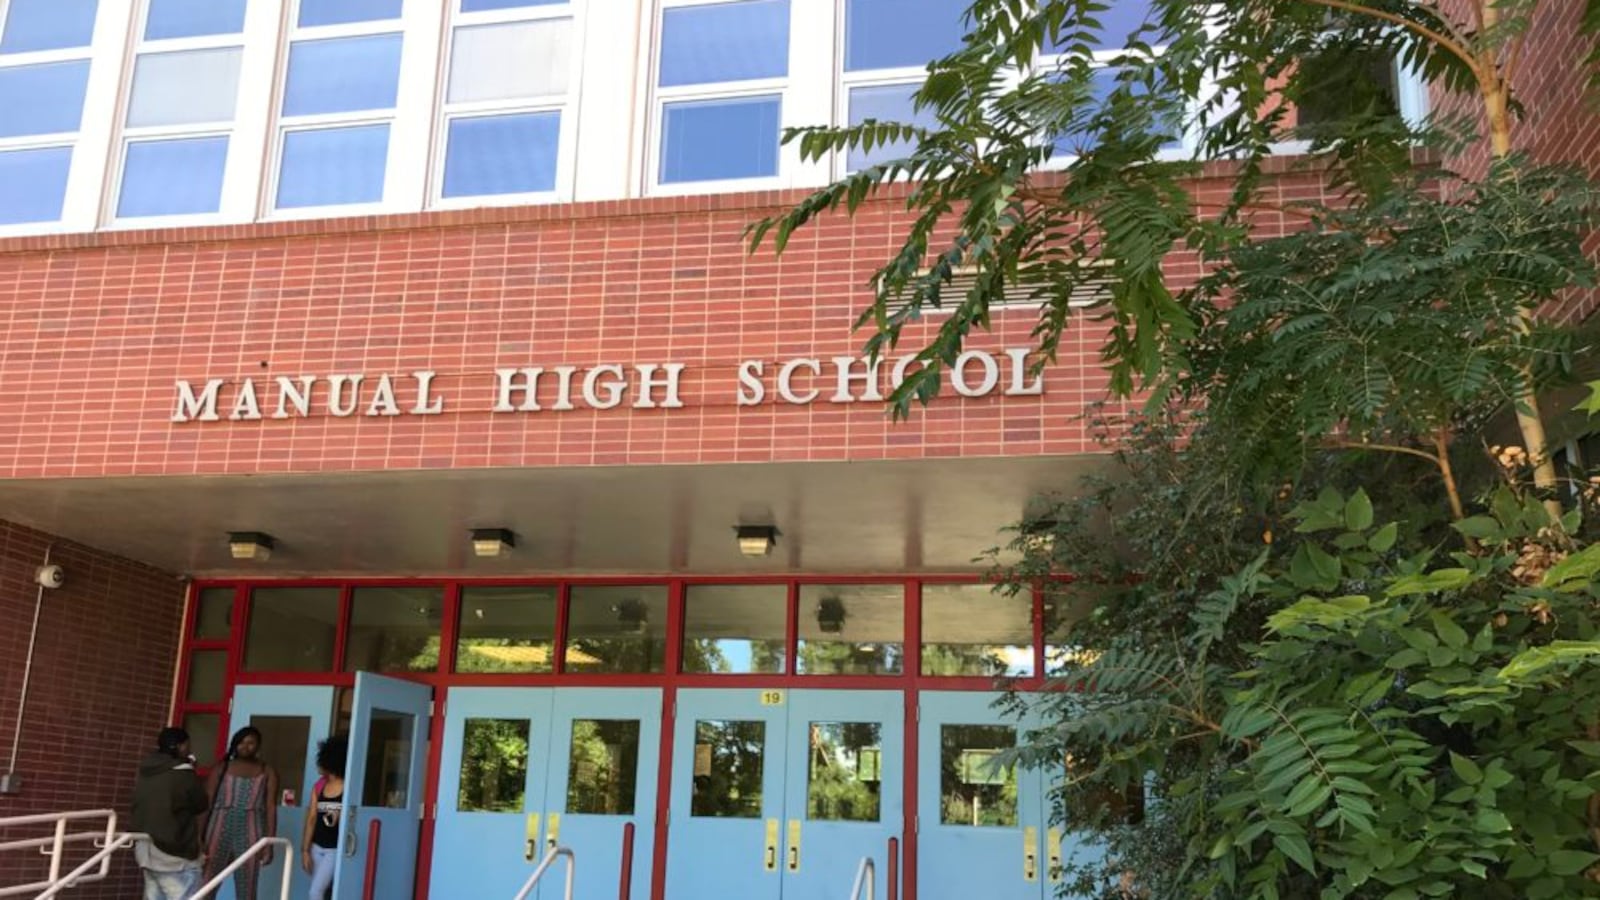 Denver's Manual High School